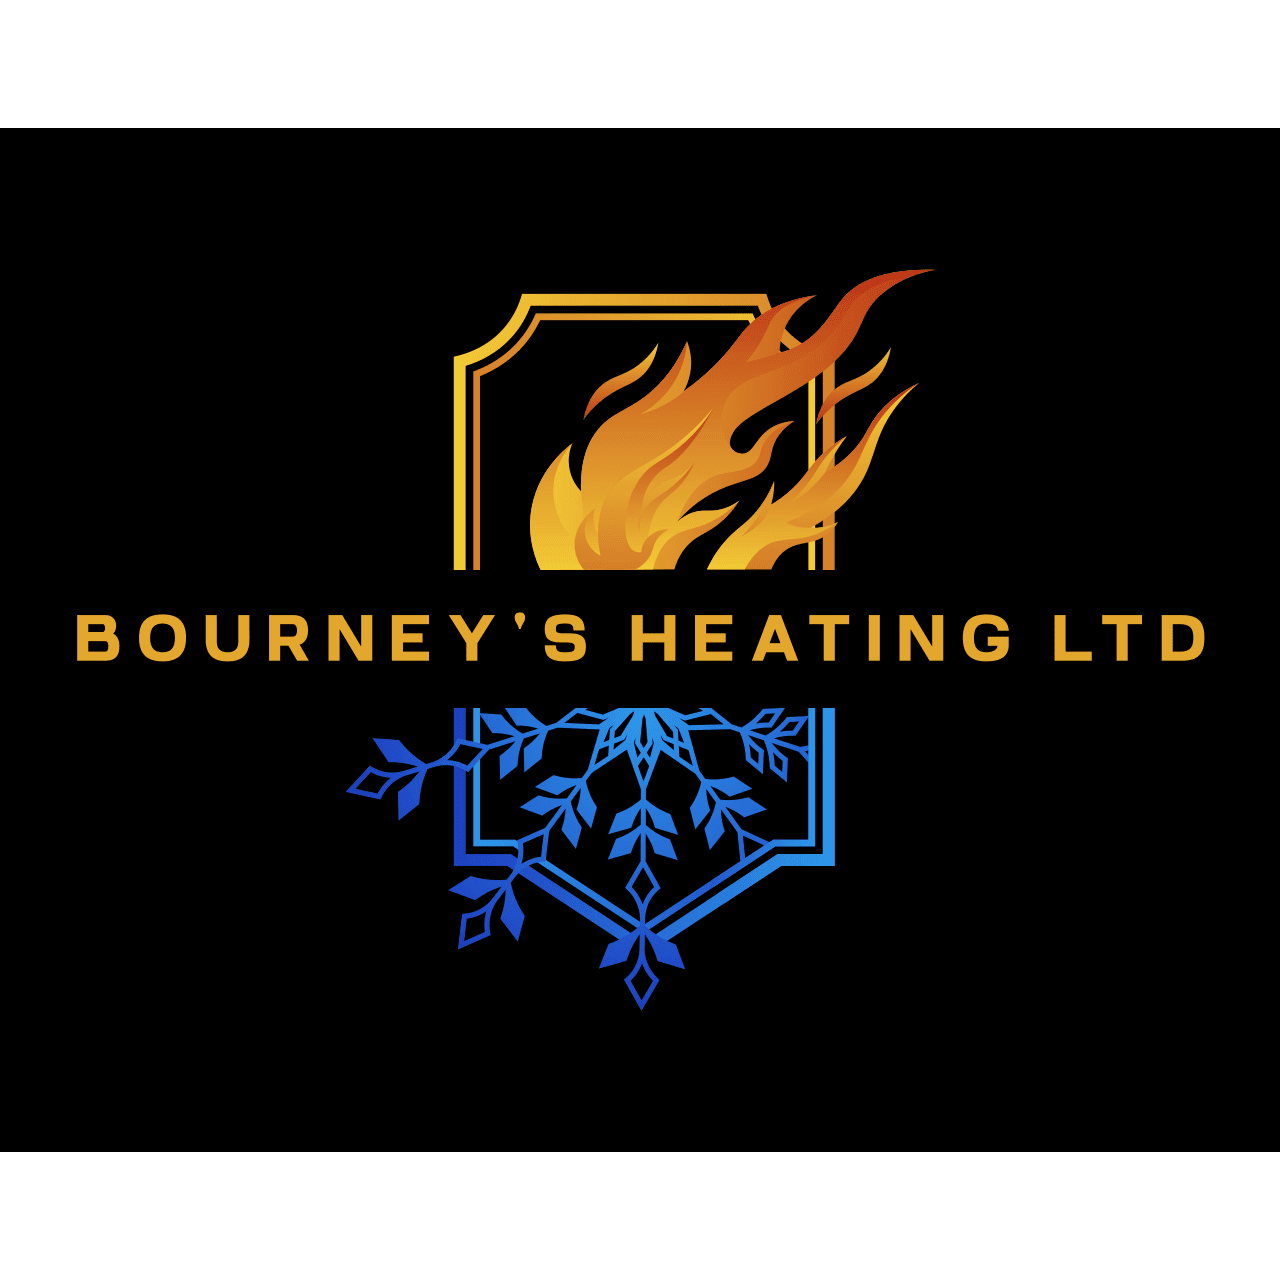 Bourney's Heating Ltd logo